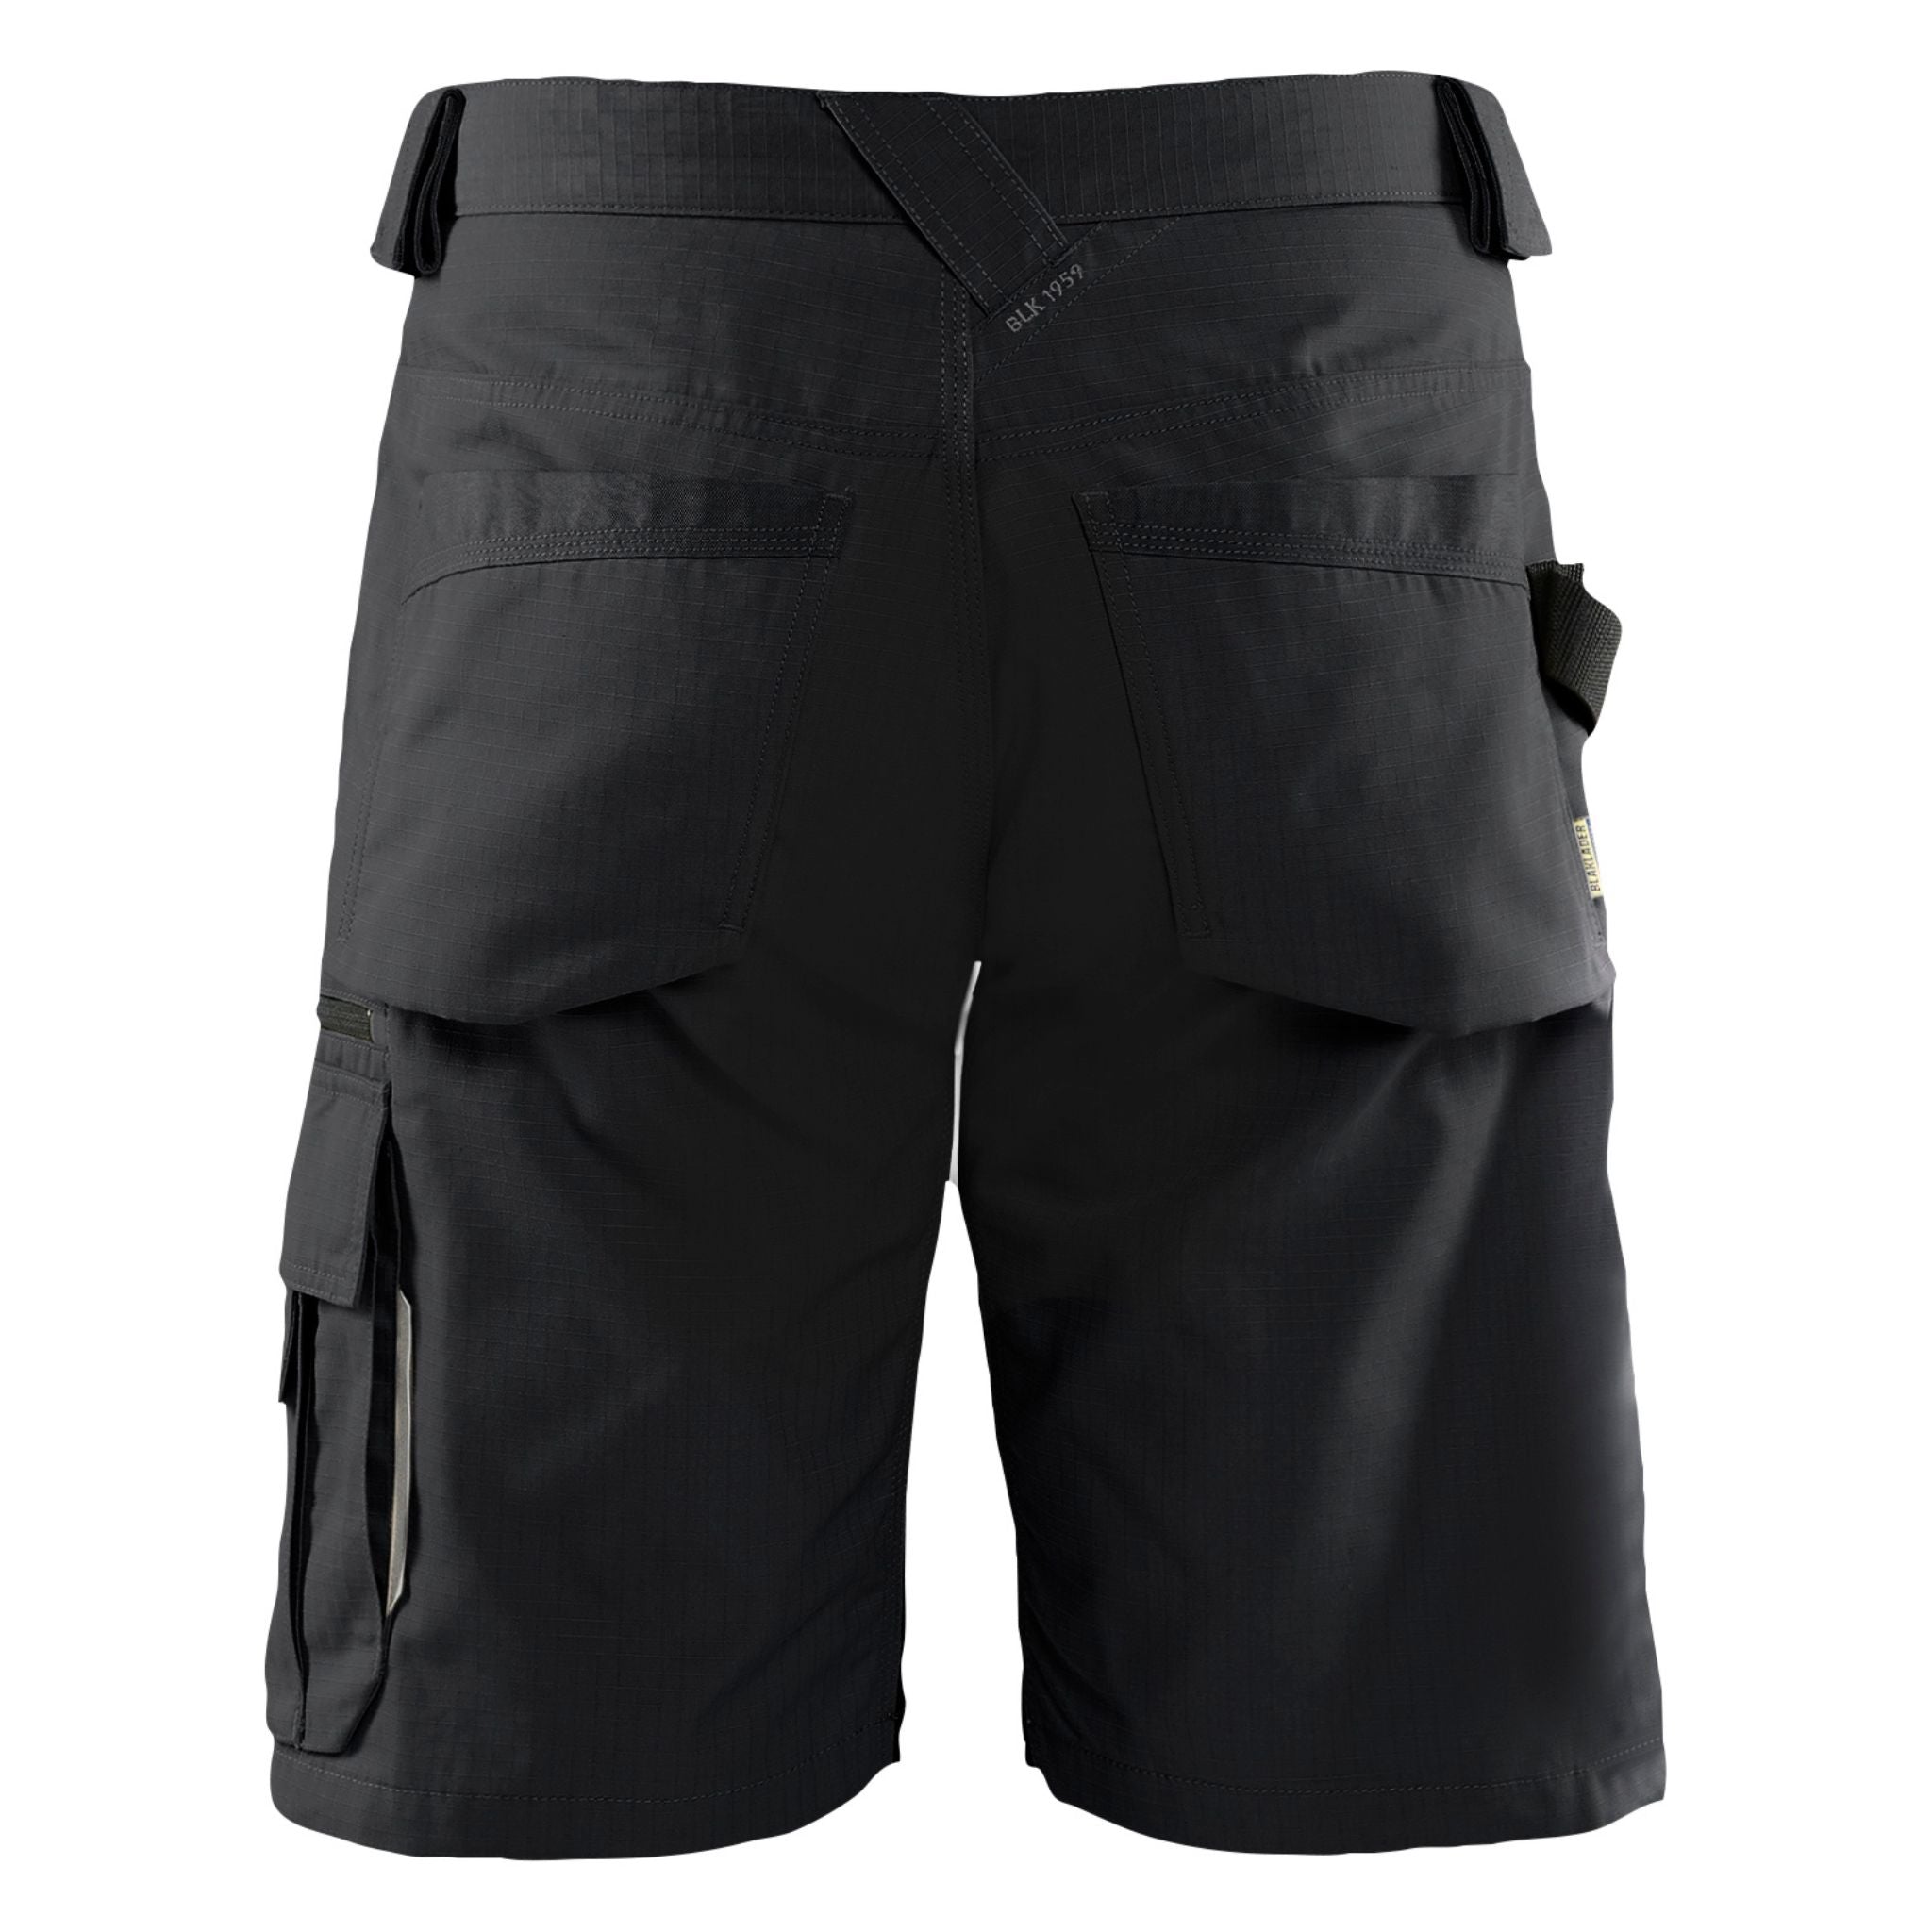 Women's black ripstop shorts back pockets